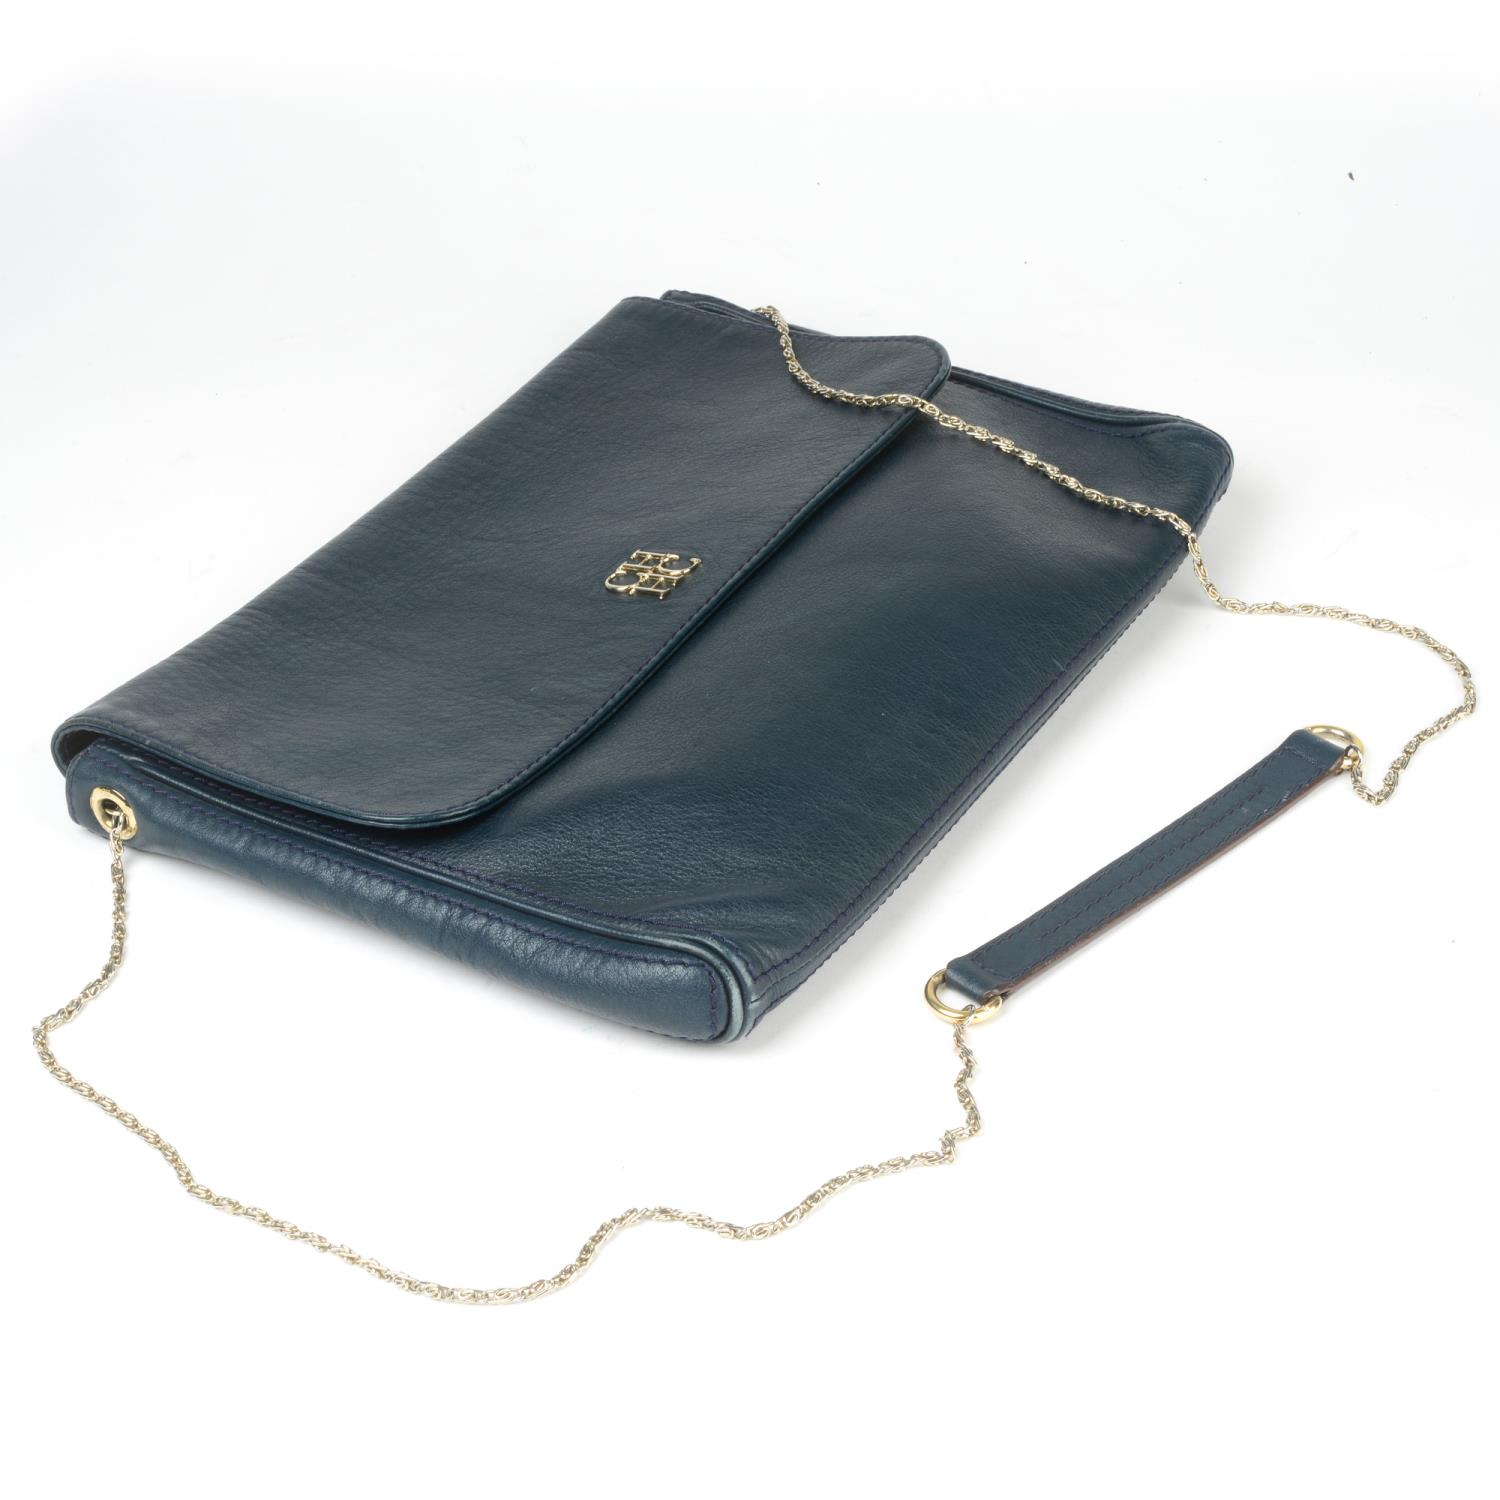 CAROLINA HERRERA - a leather handbag. - Image 2 of 4